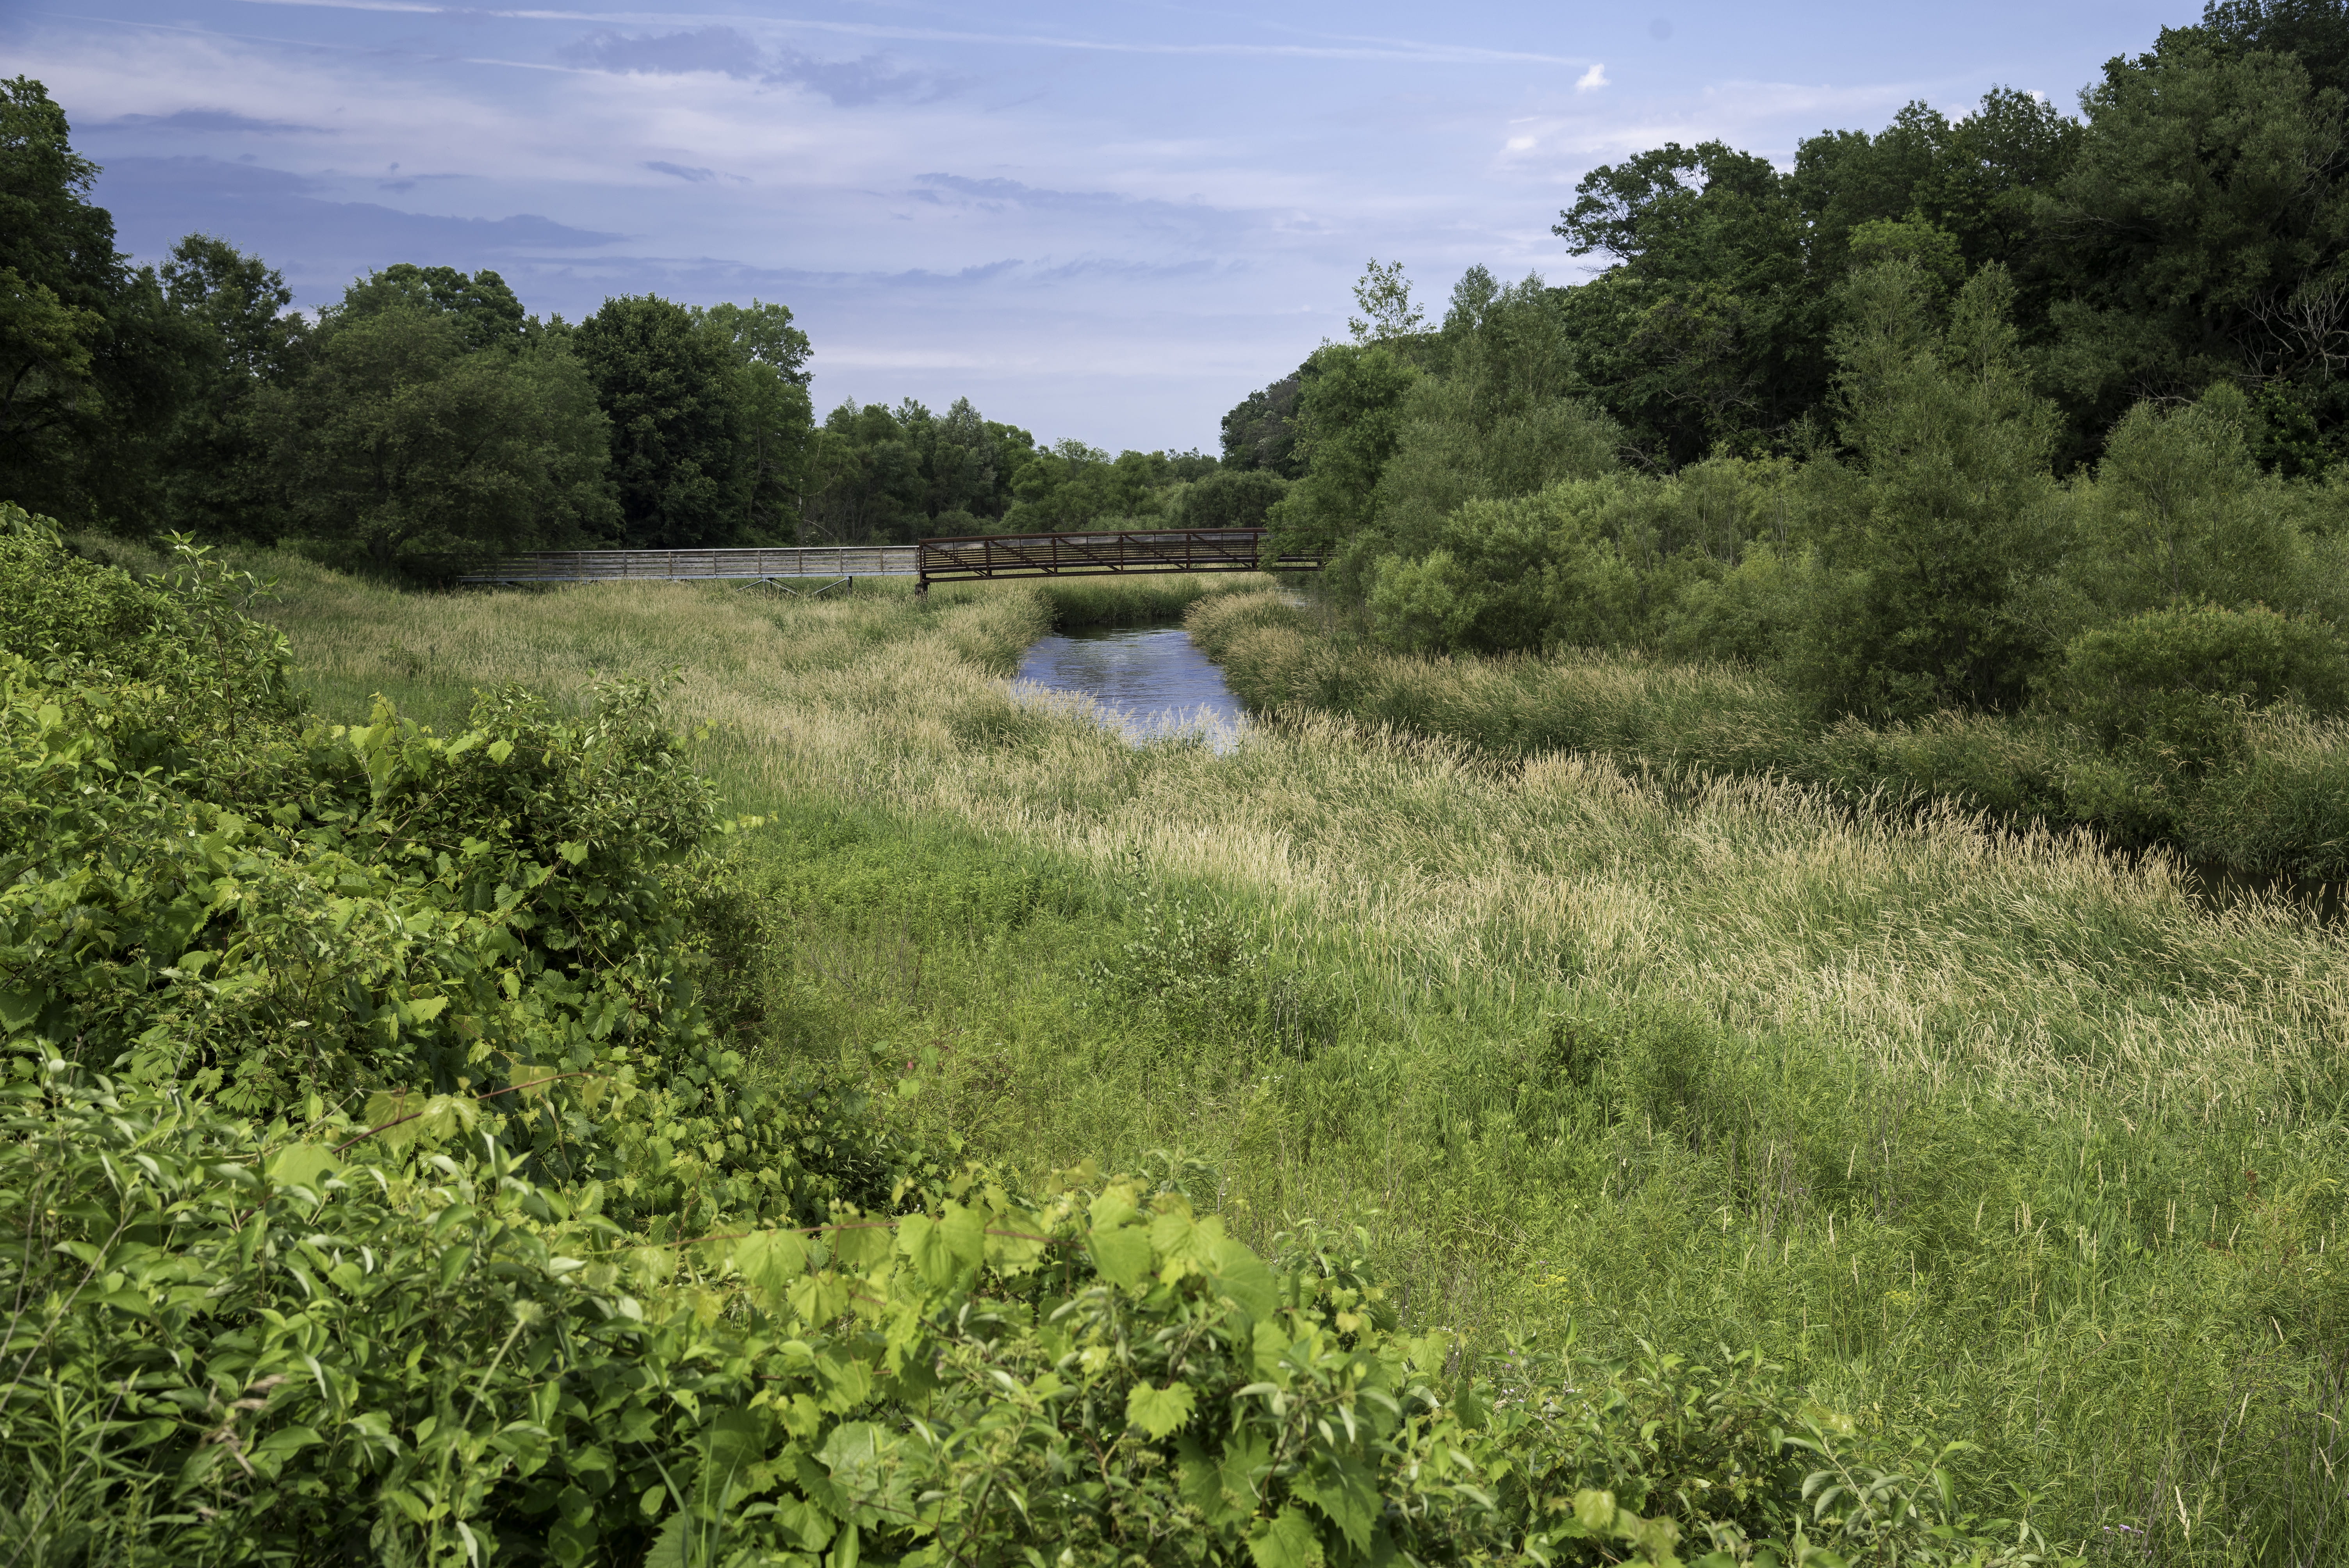 Grassfield landscape and bridge at Camrock County Park, landscapes